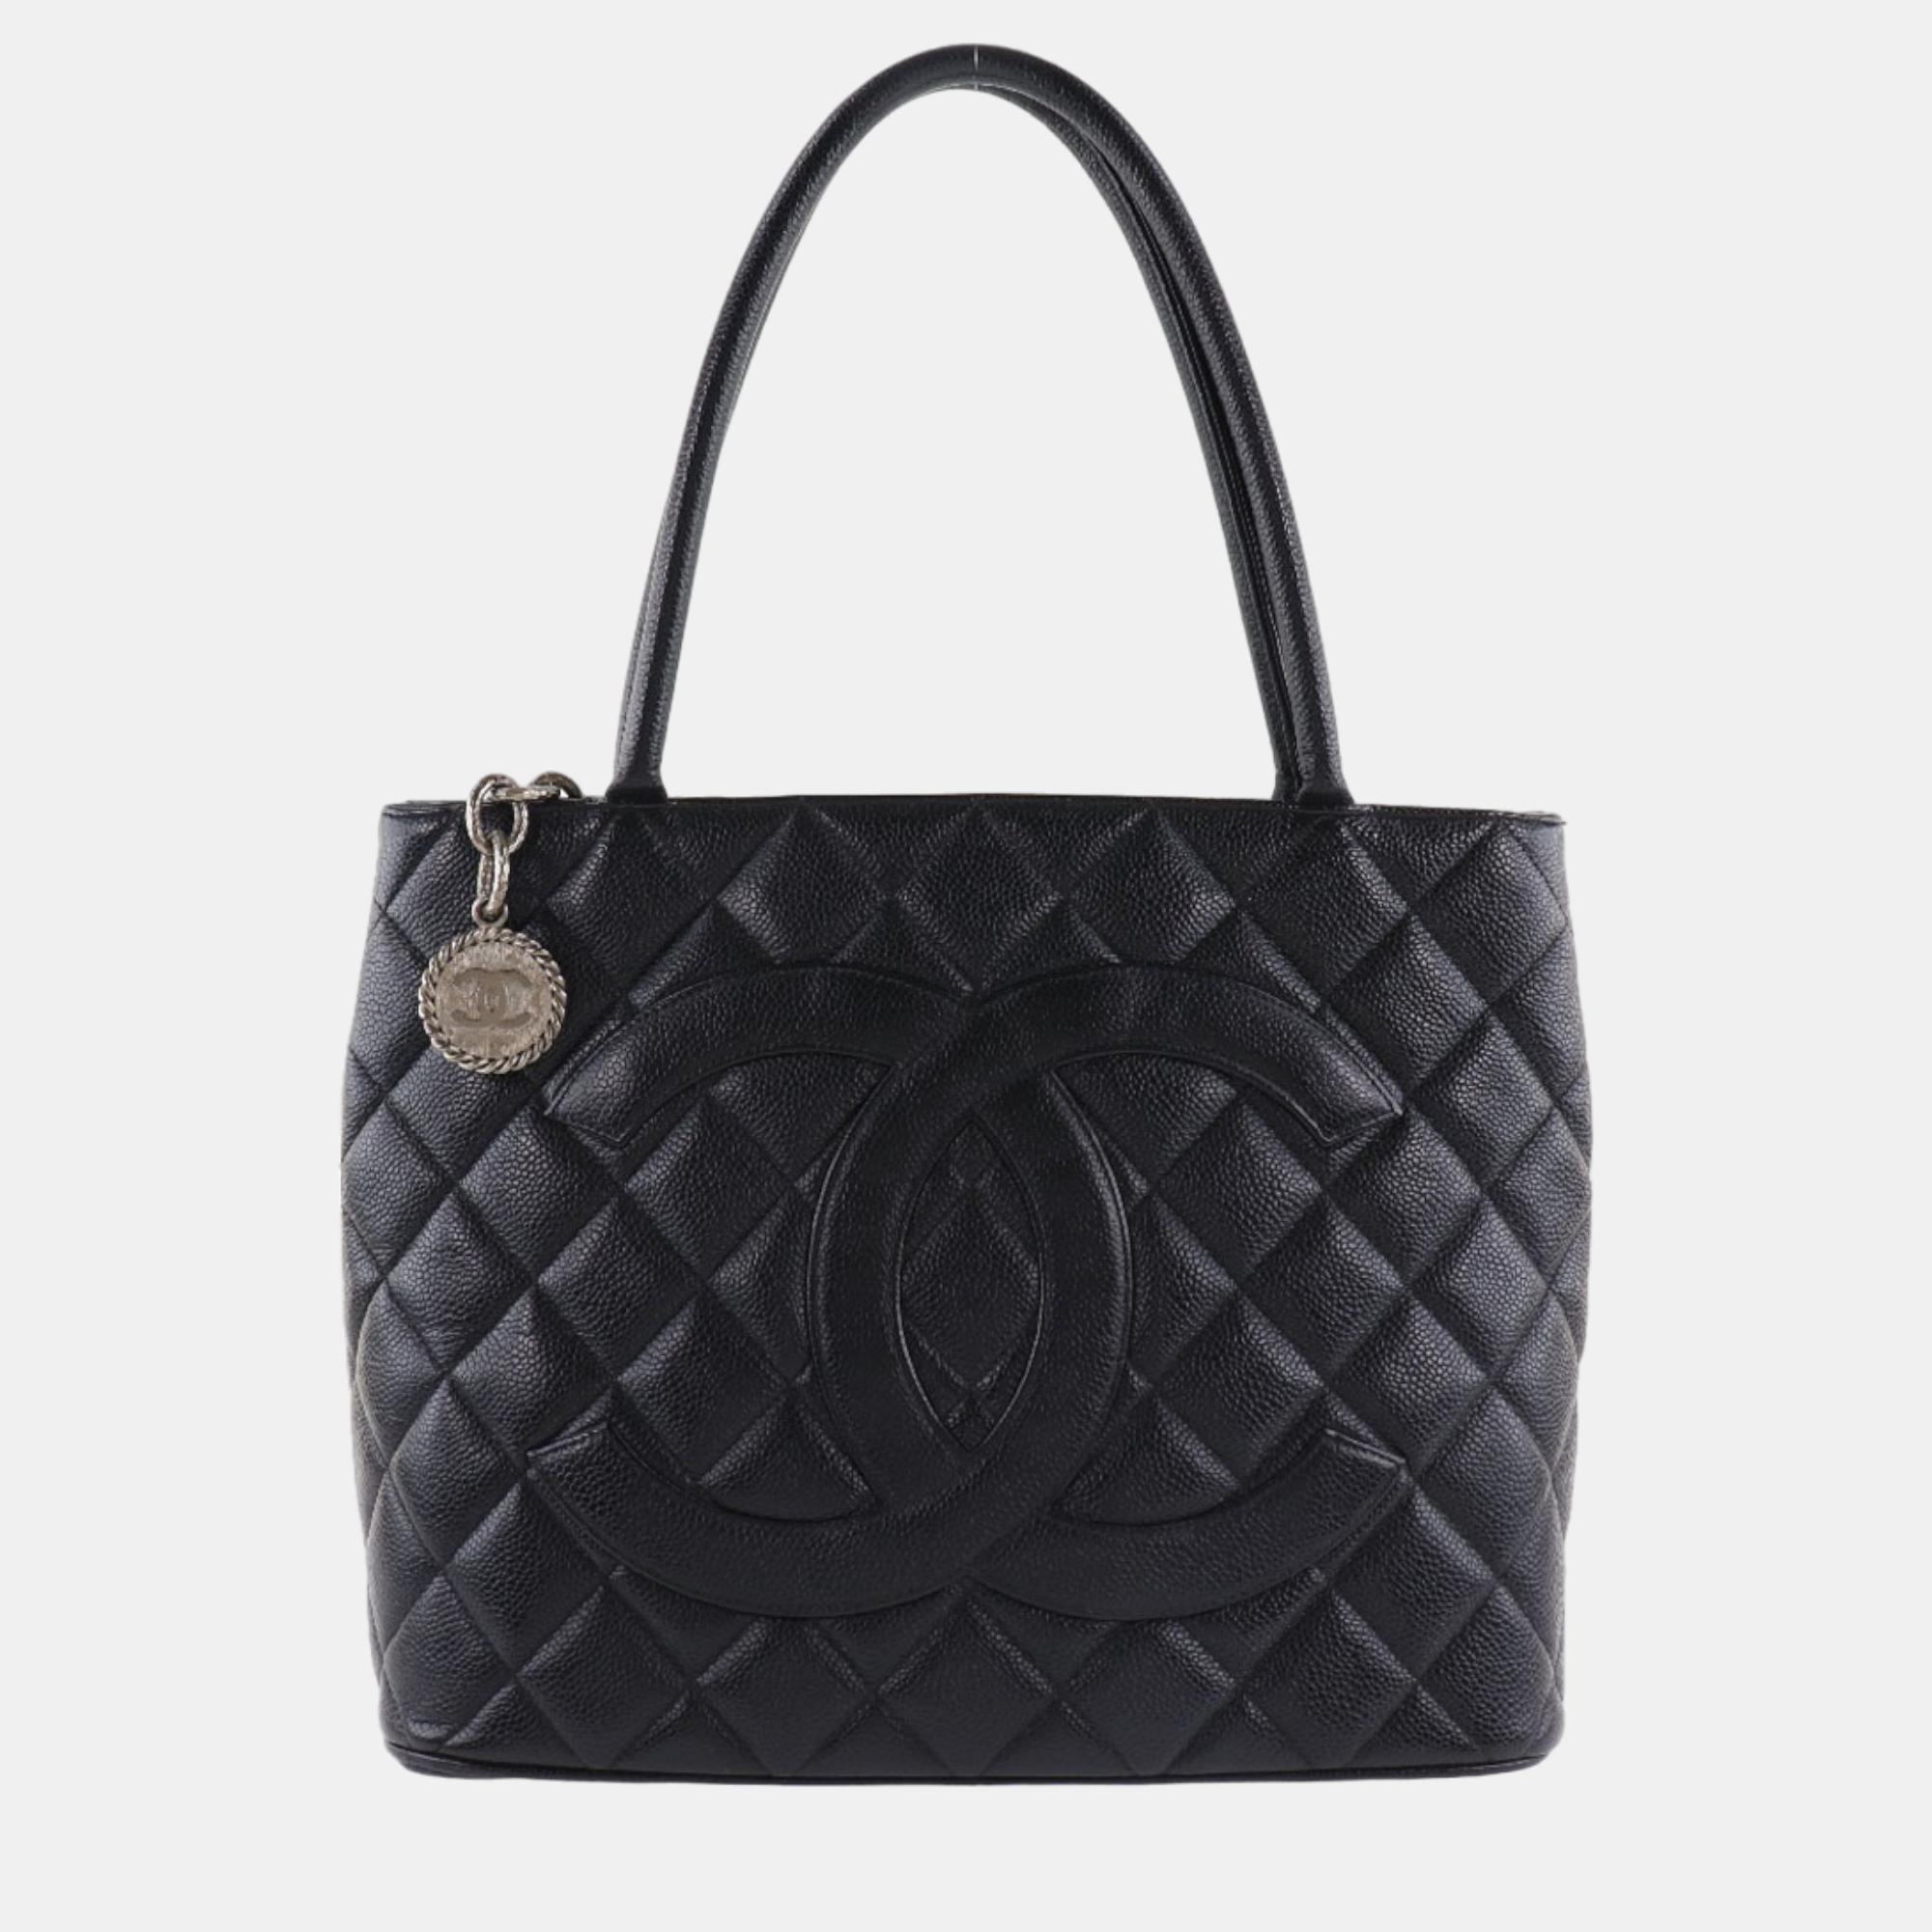 Chanel Black Caviar Leather CC Medallion Tote Bag